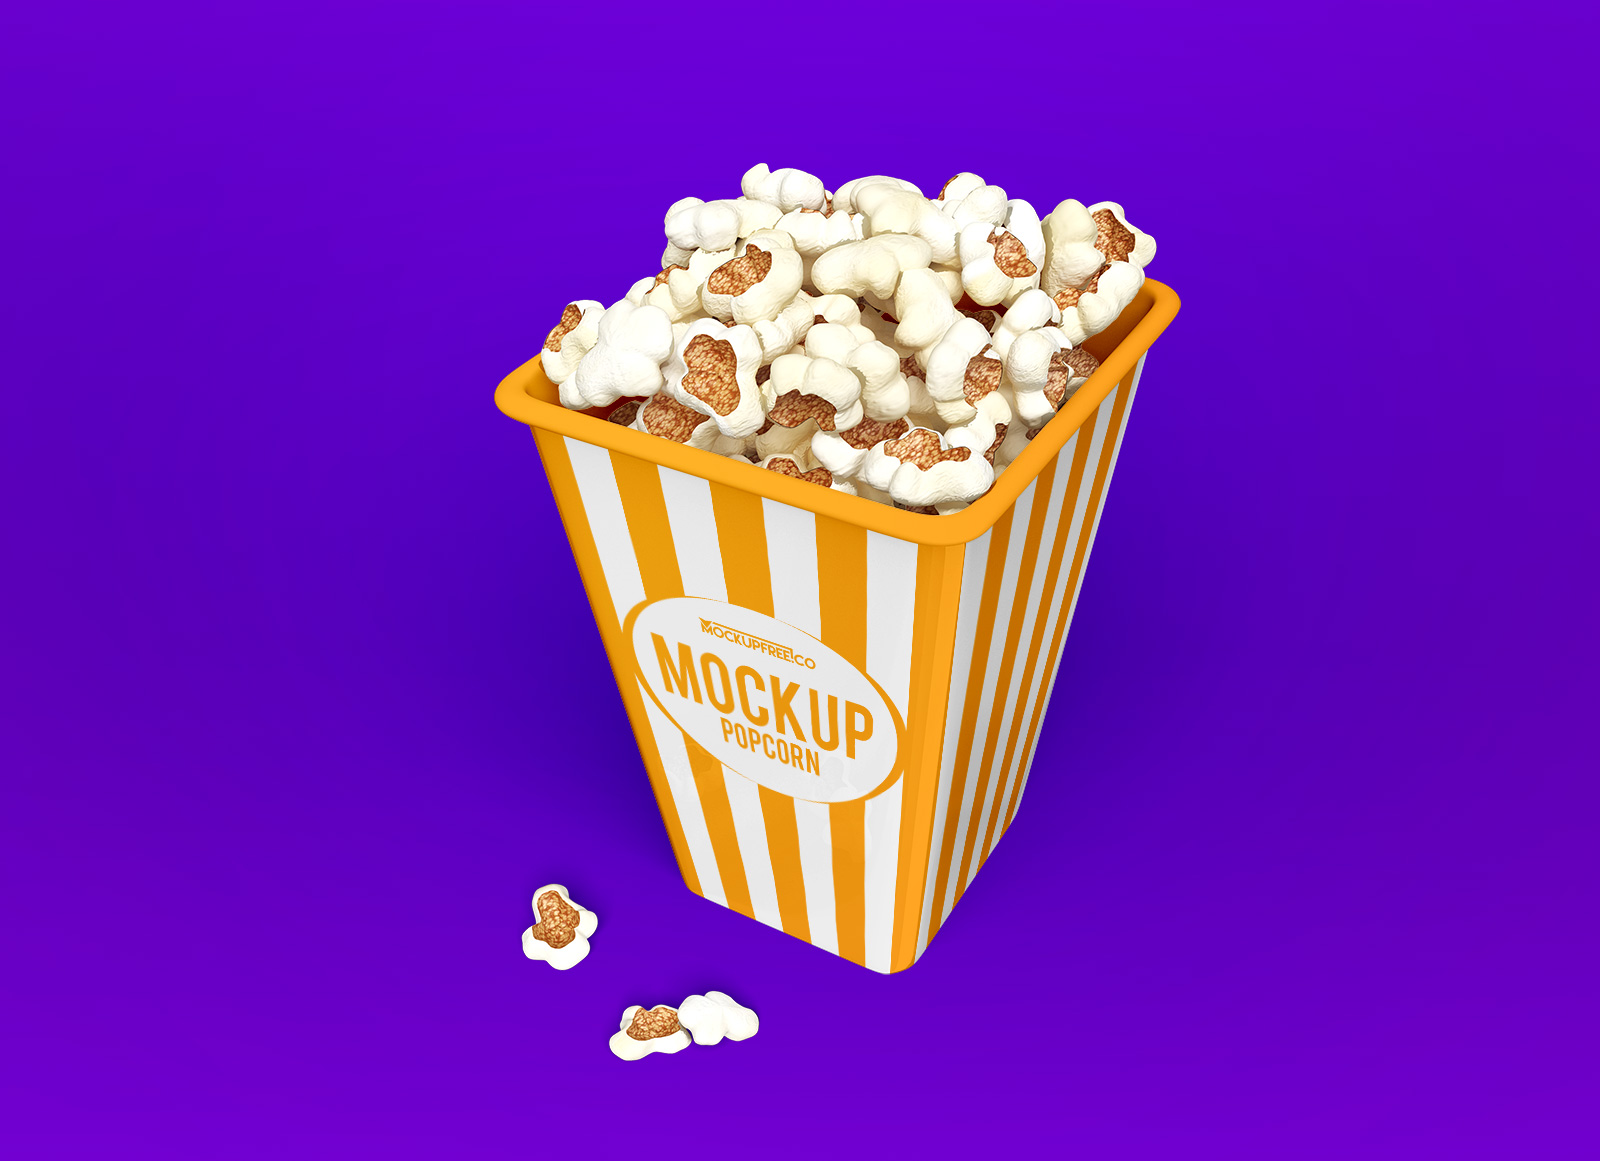 Free Popcorn Box Packaging Mockup PSD Set